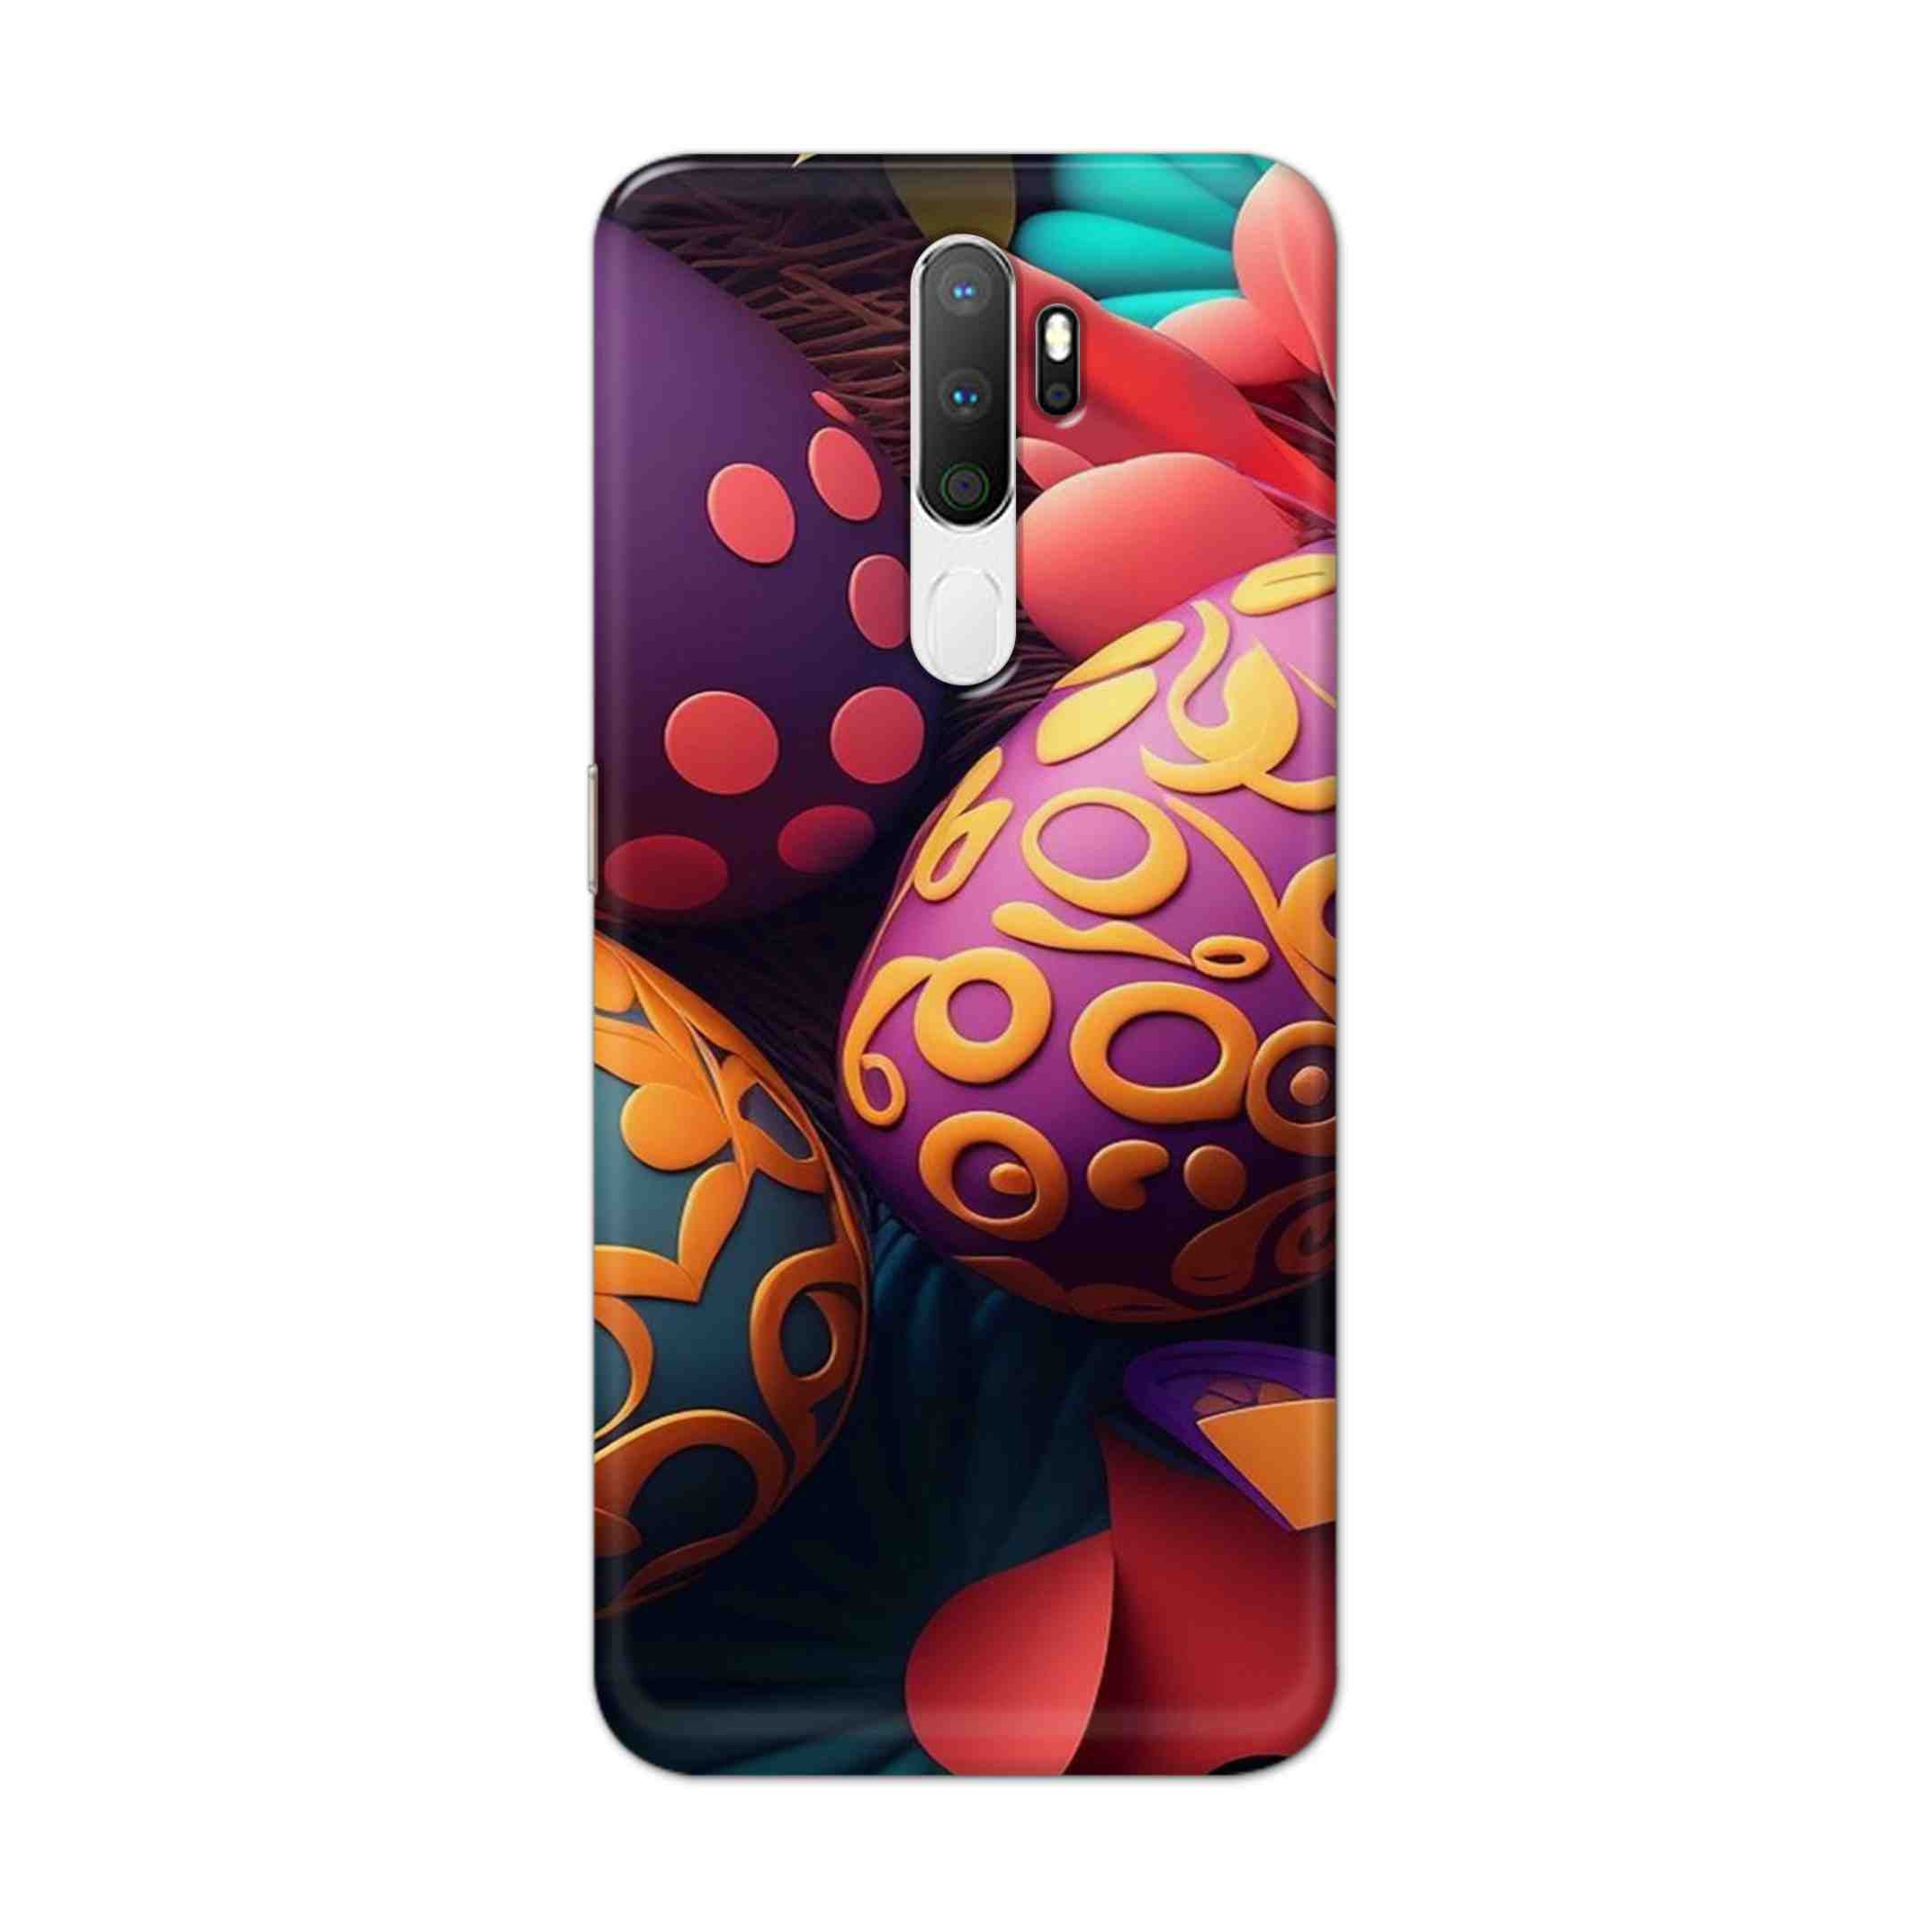 Buy Easter Egg Hard Back Mobile Phone Case Cover For Oppo A5 (2020) Online